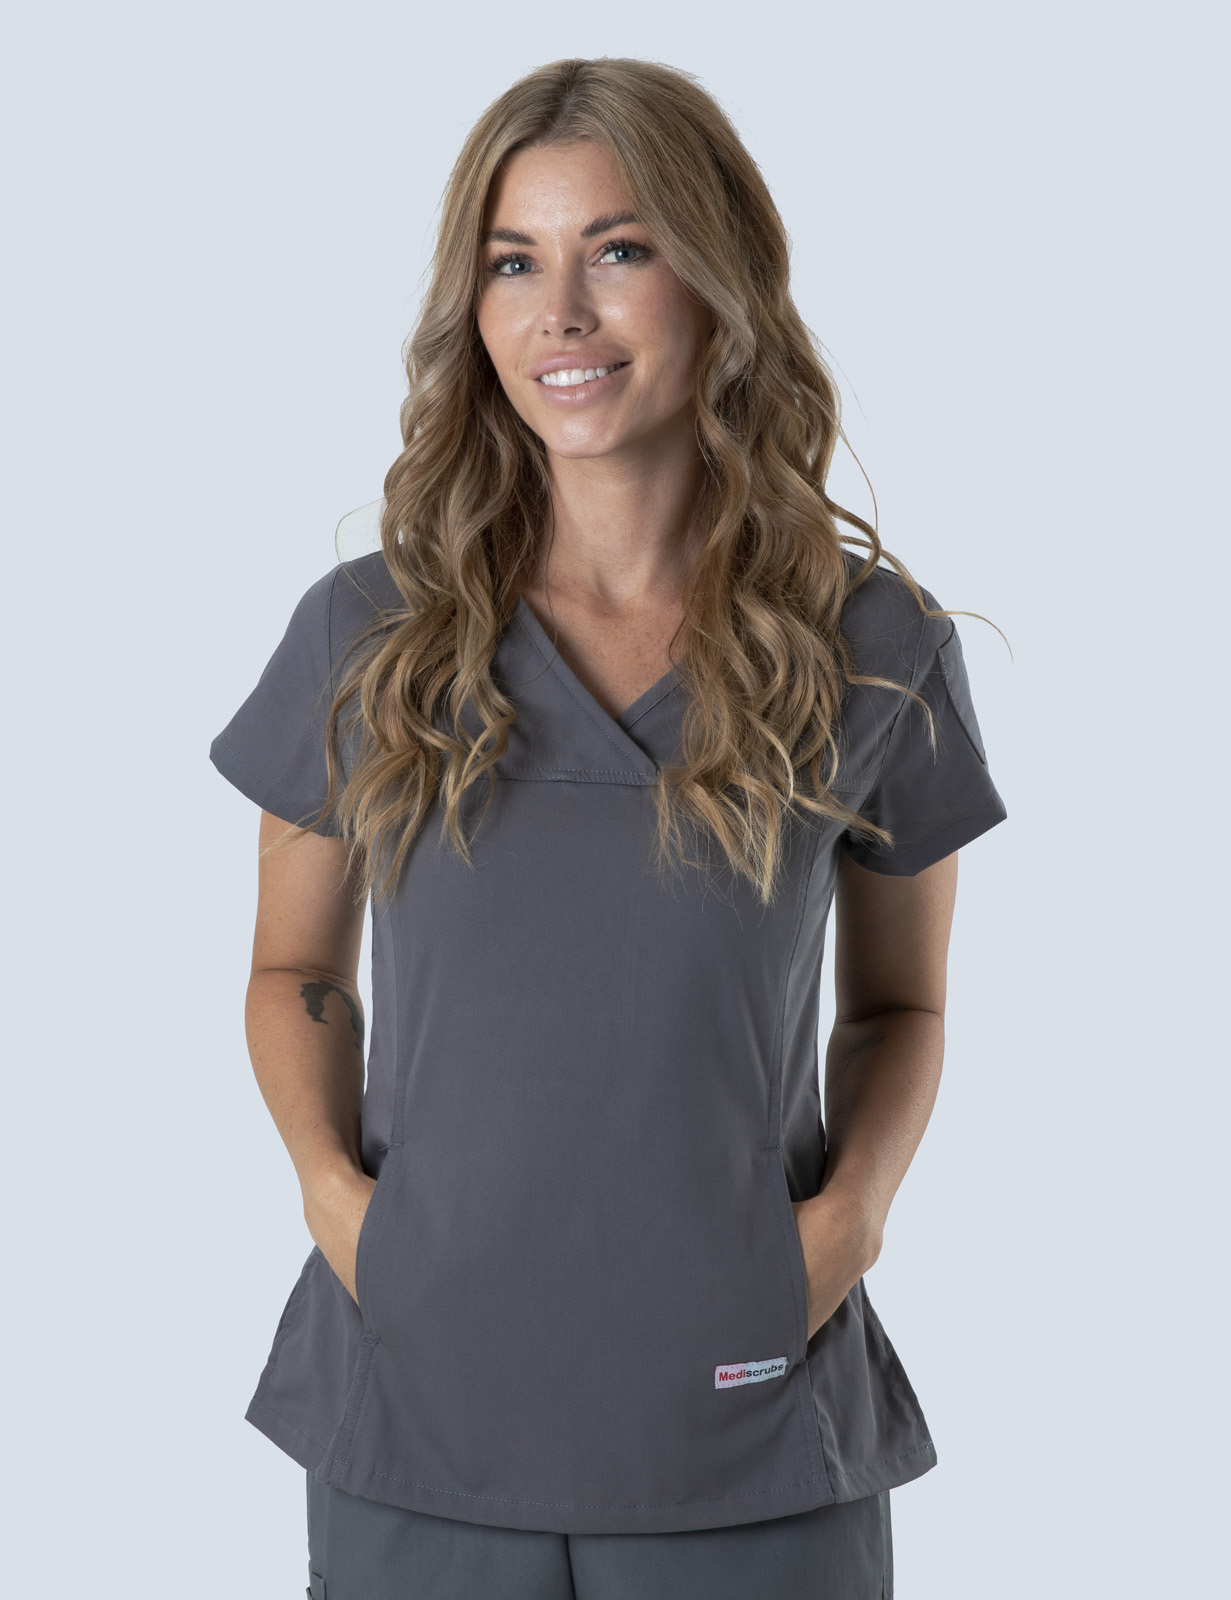 Queensland Children's Hospital Emergency Department Senior Medical Officer Uniform Top Bundle  (Women's Fit Top in Steel Grey  incl Logos)